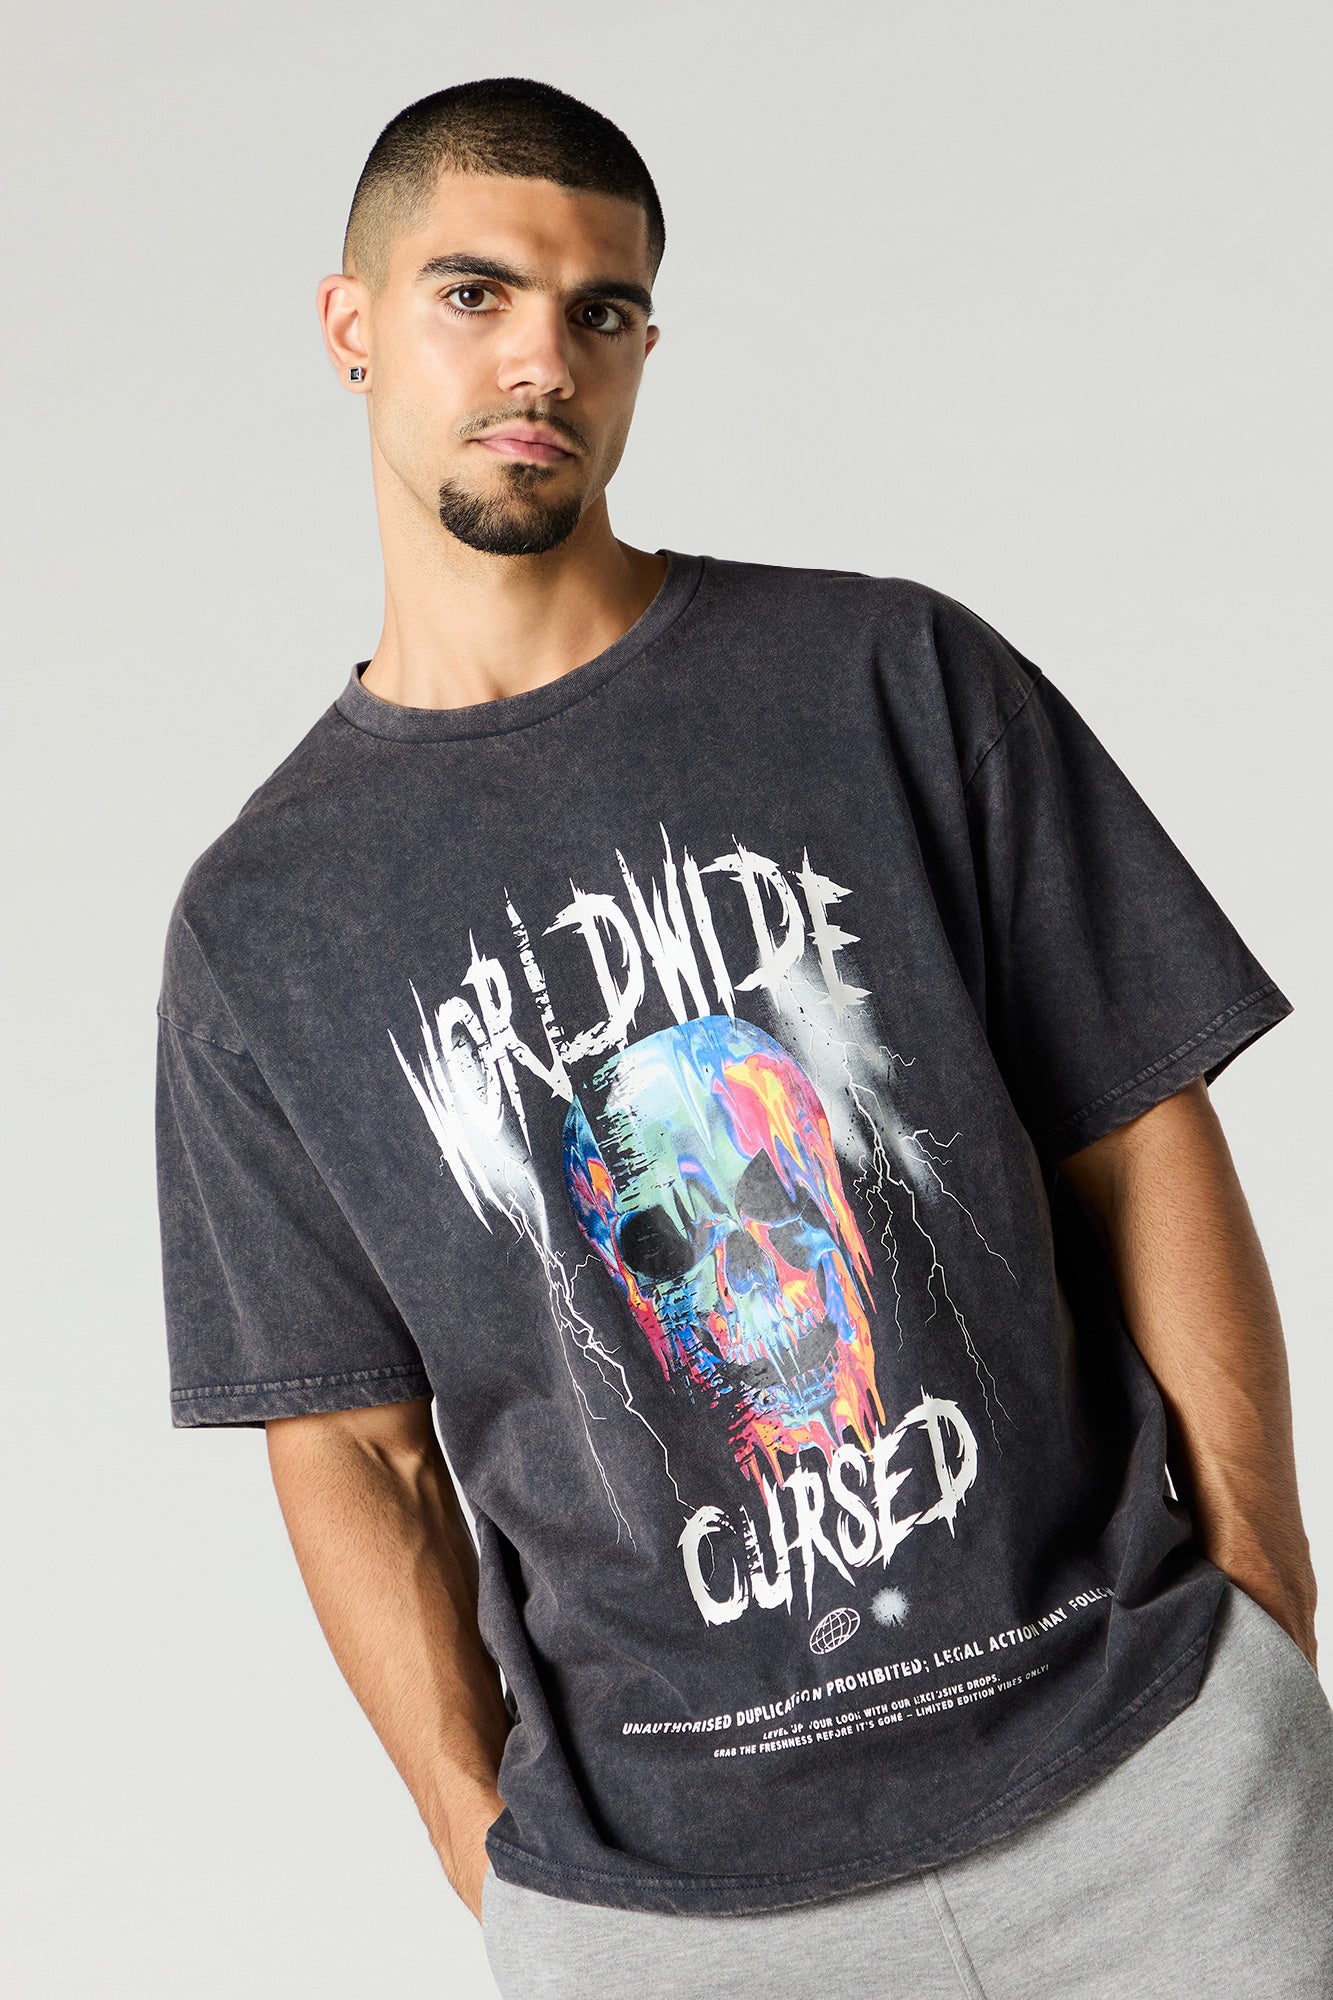 Worldwide Cursed Graphic T-Shirt